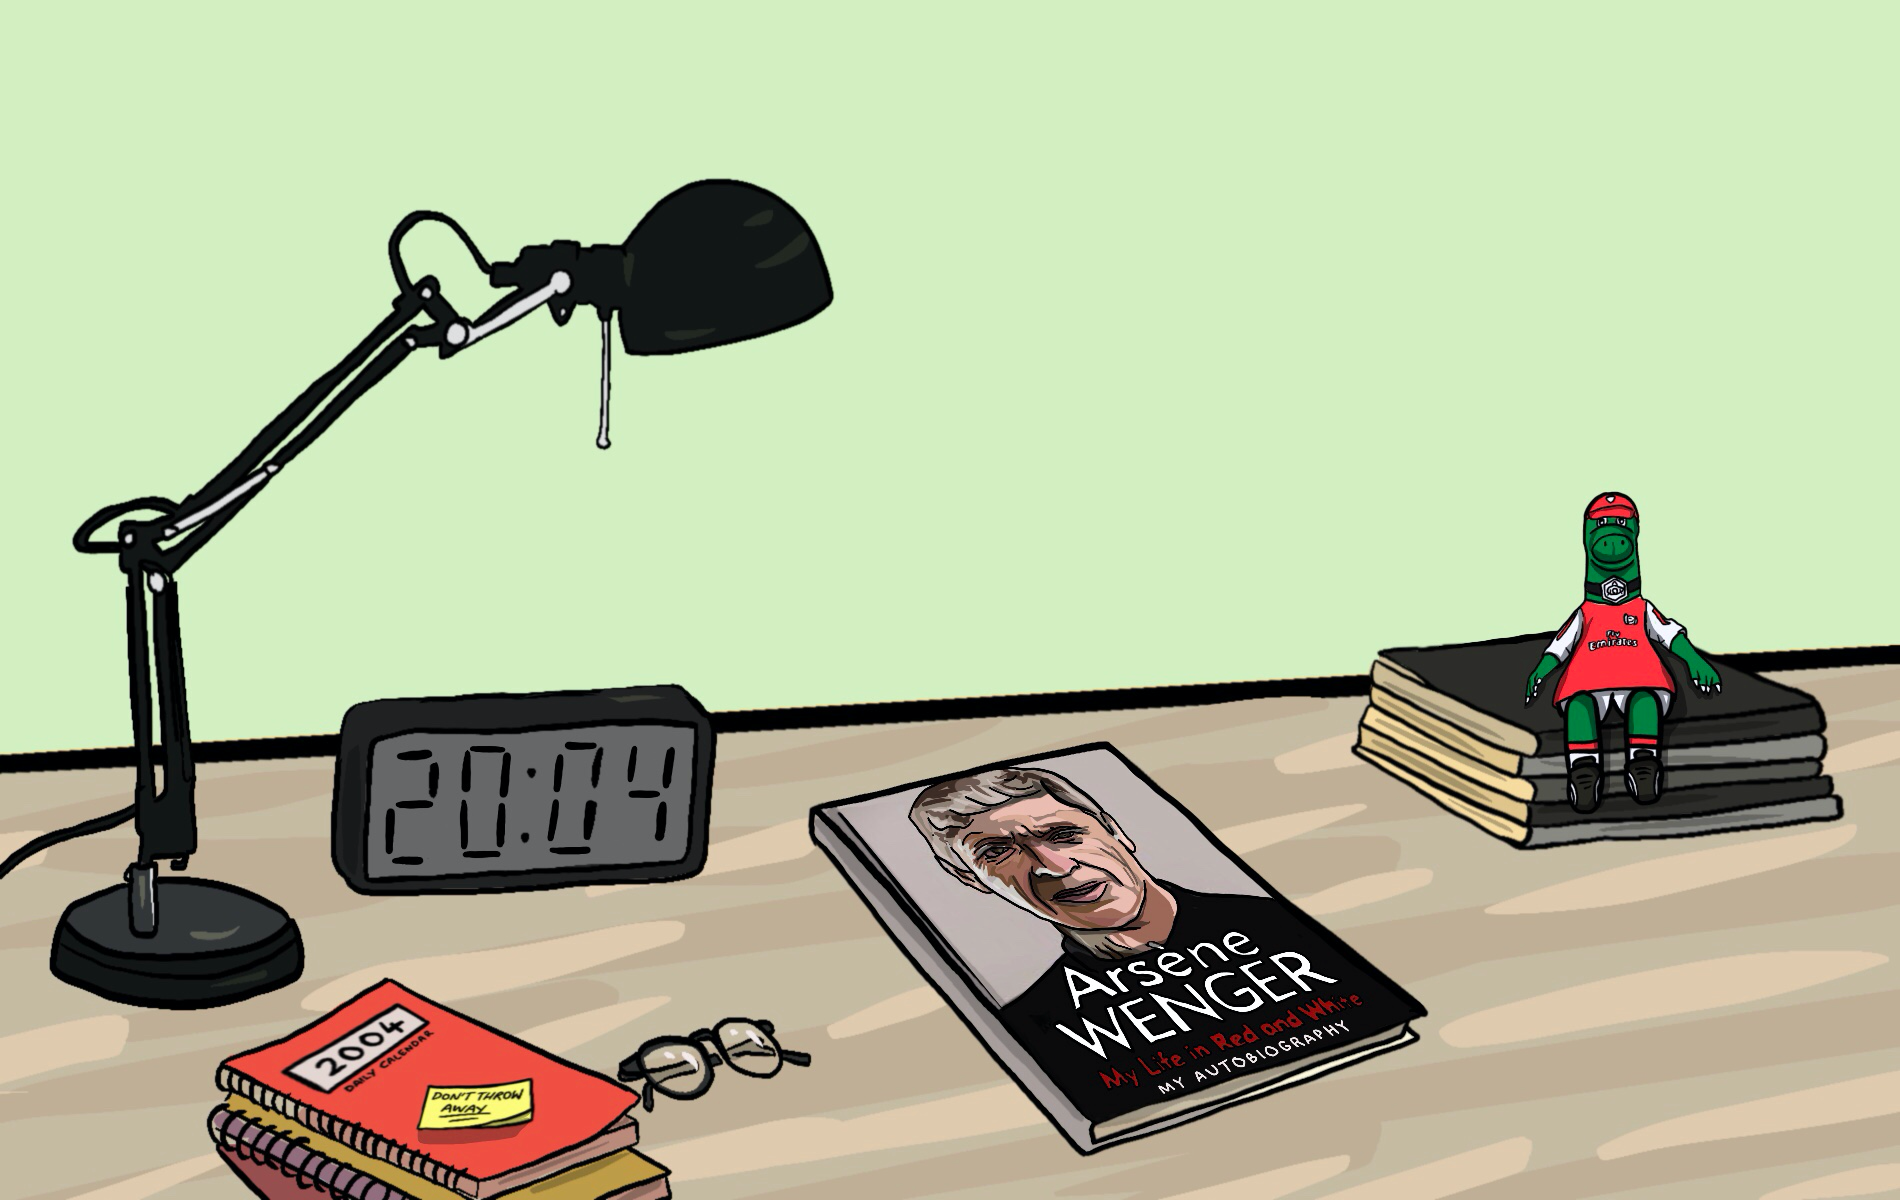 Arsene Wenger Book on a desk